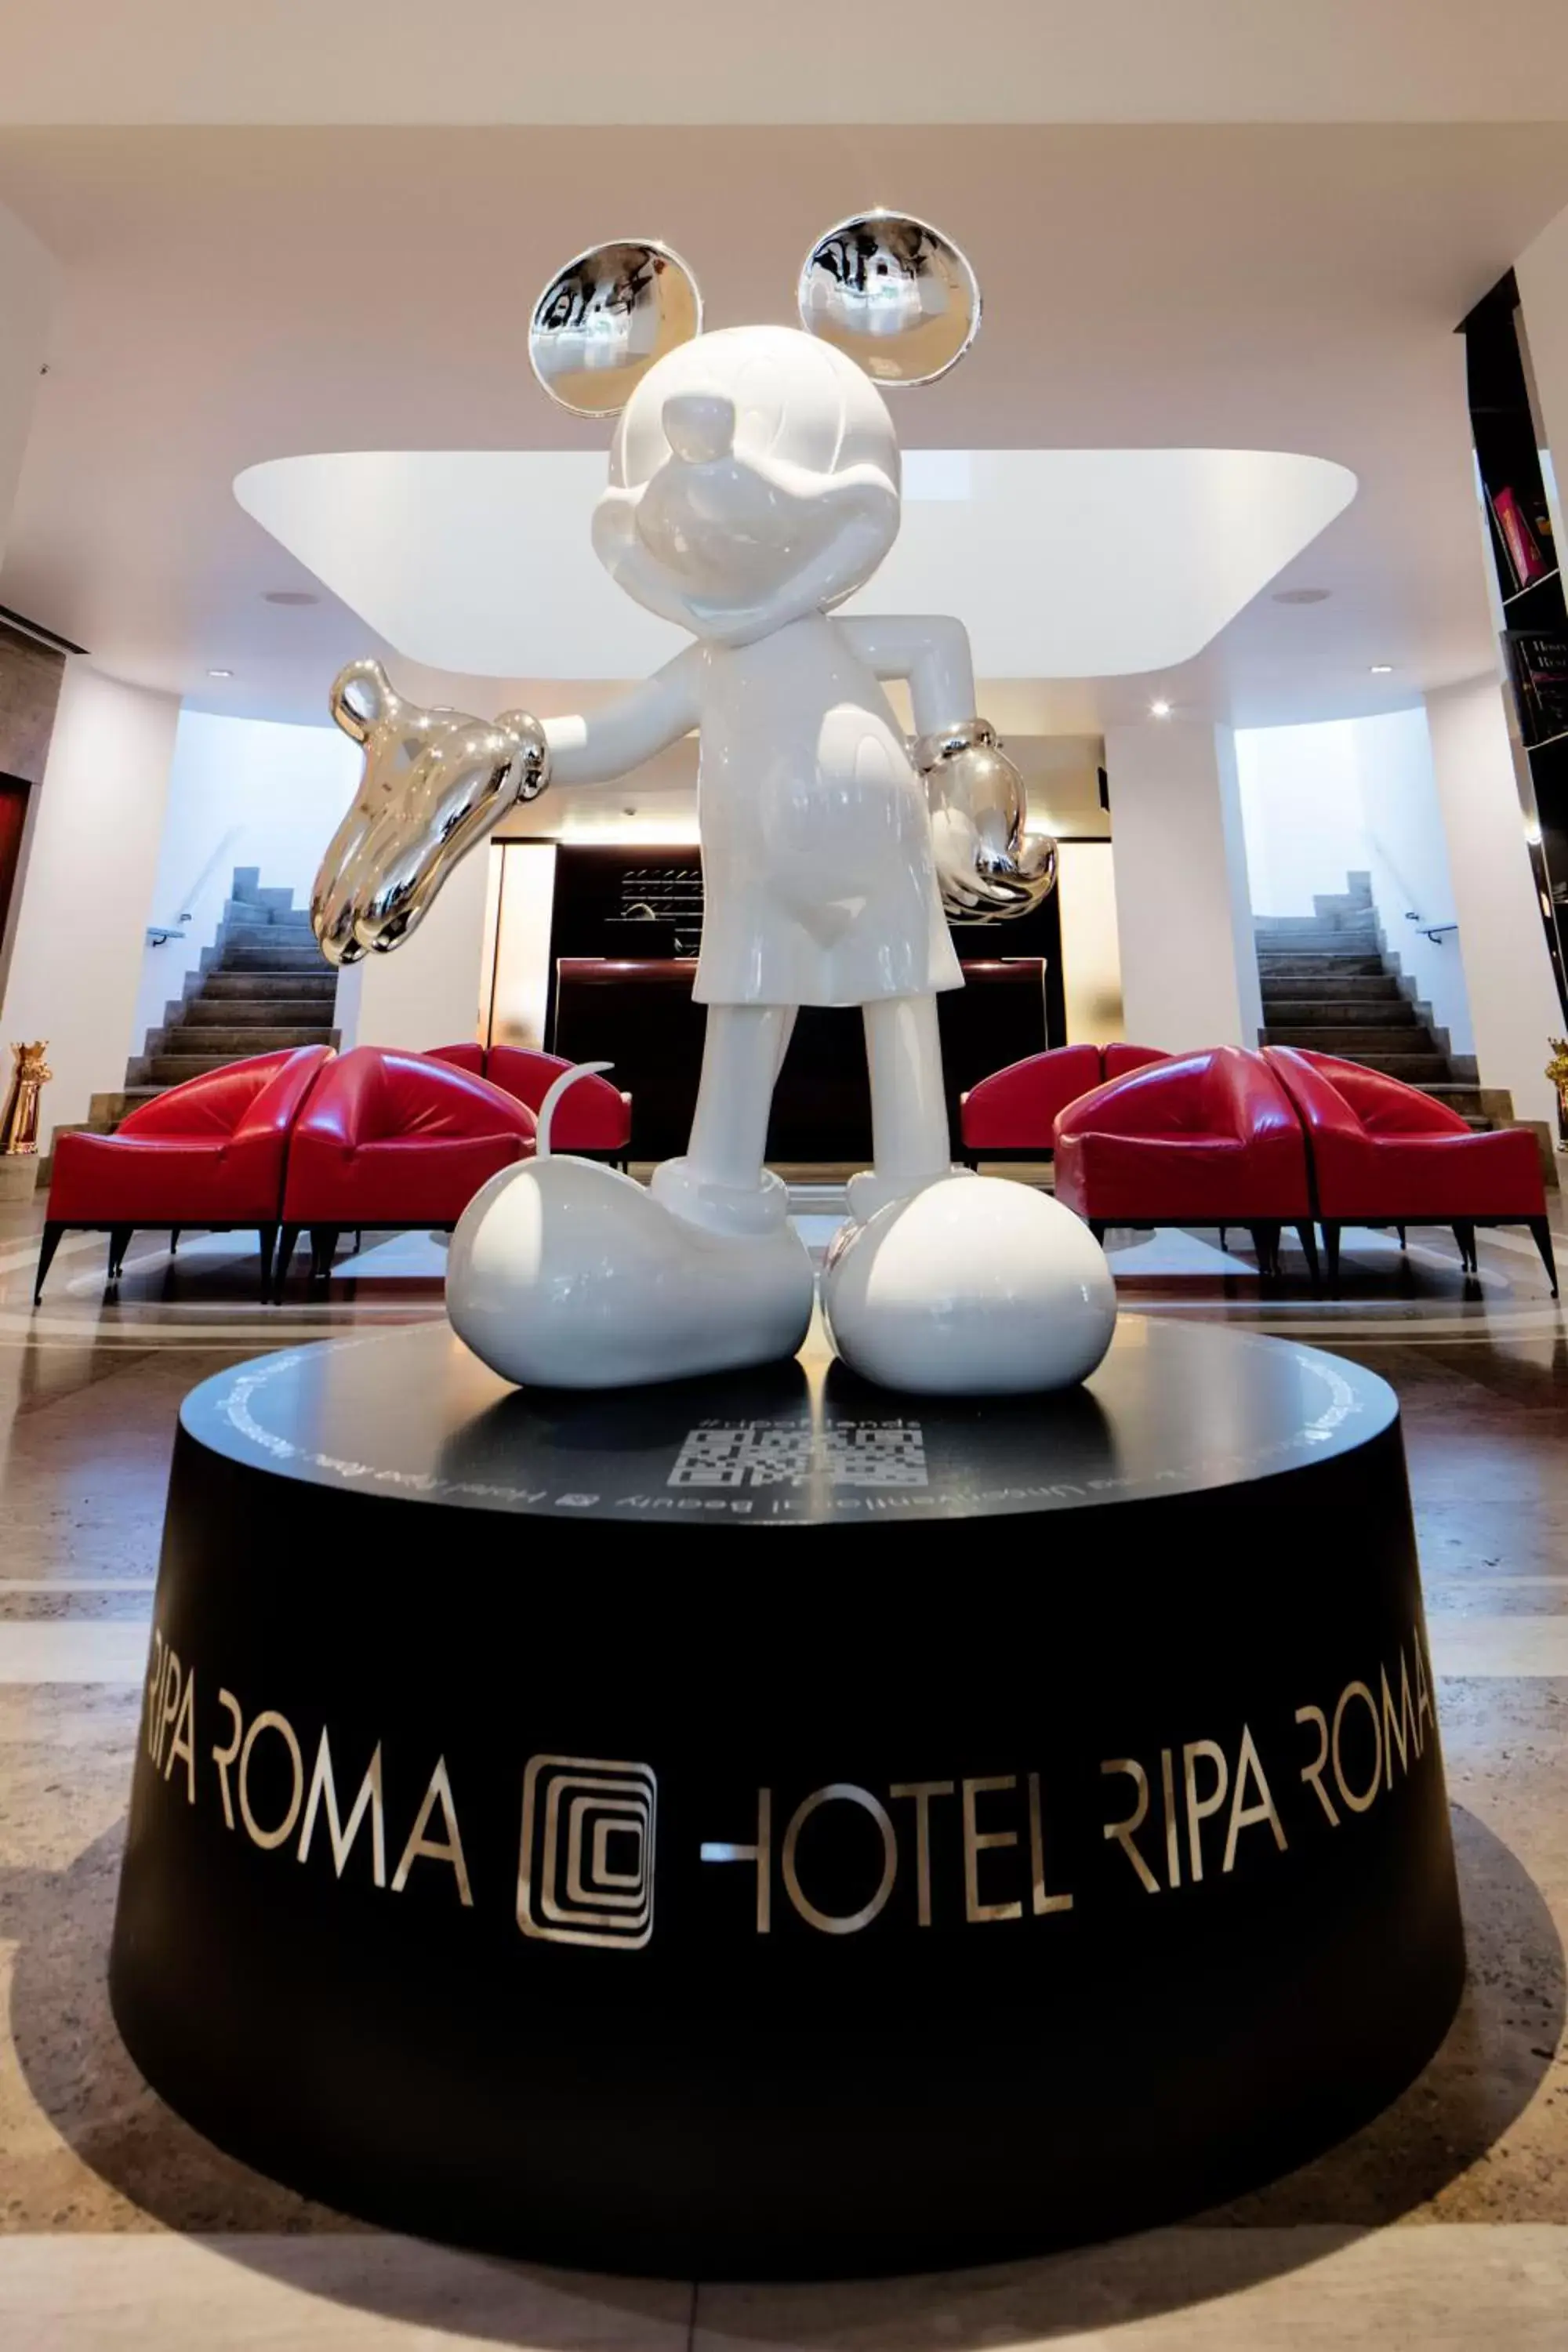 Decorative detail in Hotel Ripa Roma